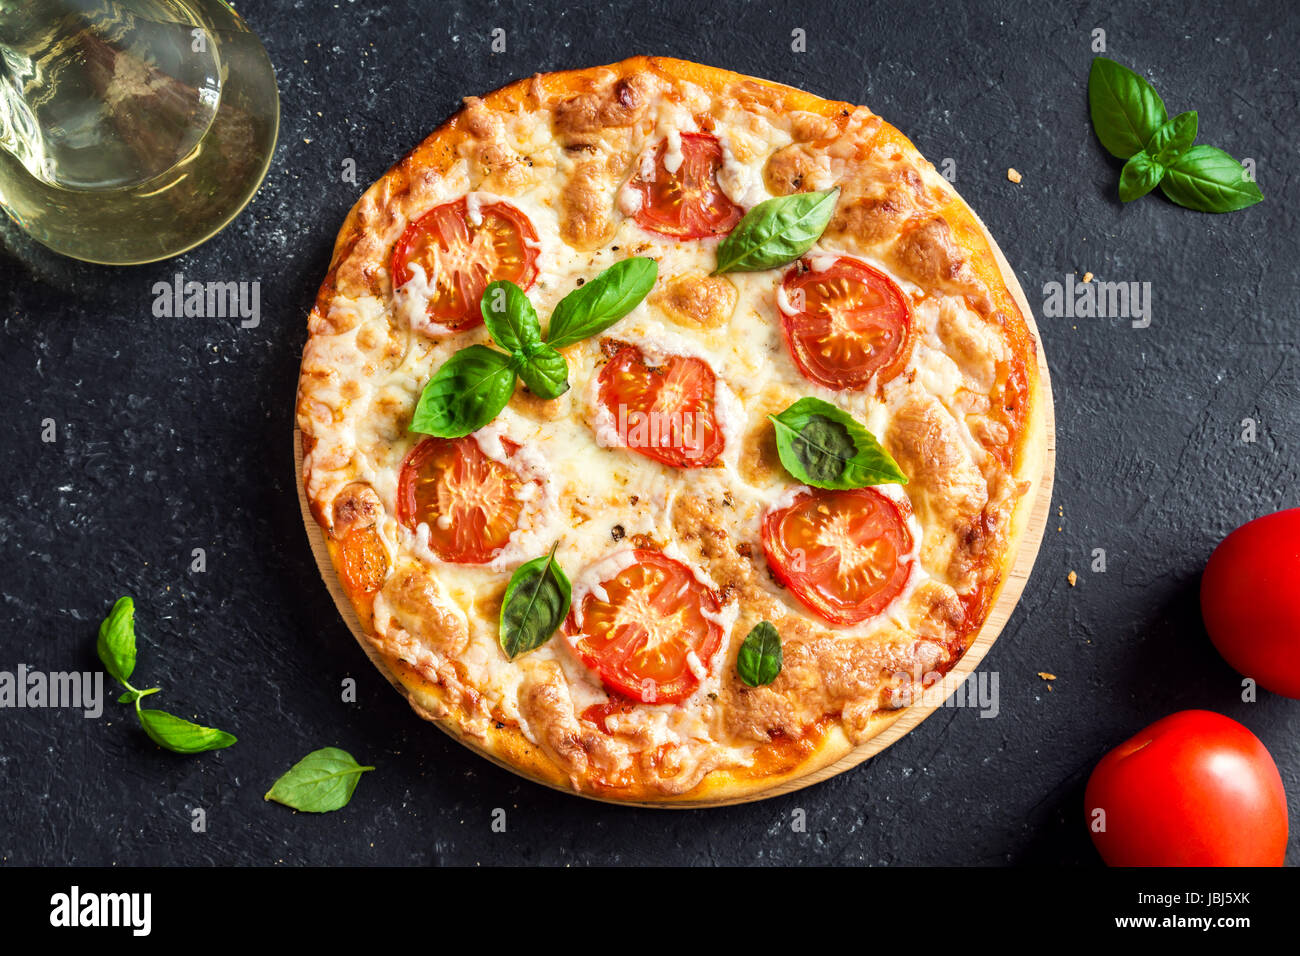 Pizza Margherita sobre fondo de piedra negra. Margarita Pizza casera con tomate, albahaca y queso mozzarella. Foto de stock